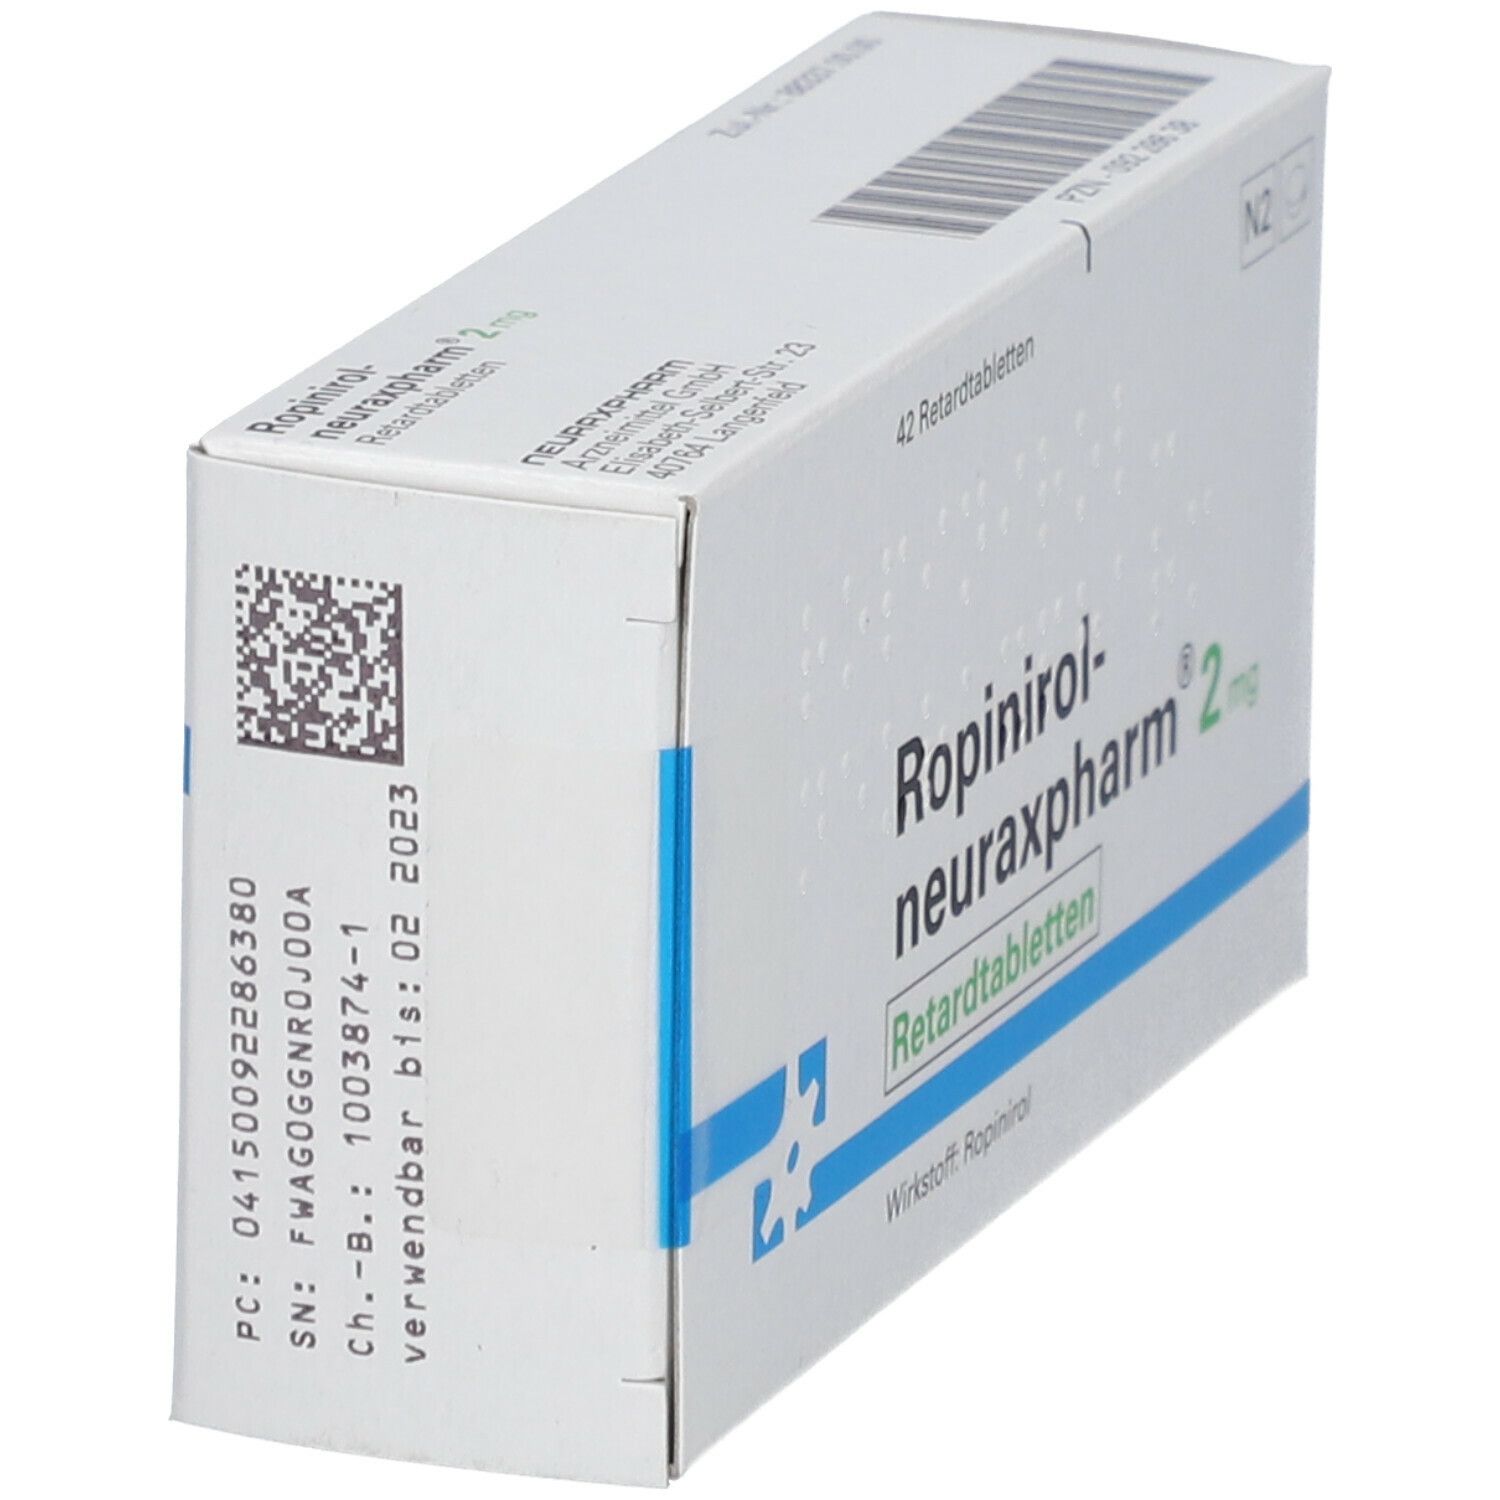 Ropinirol-neuraxpharm® 2 mg